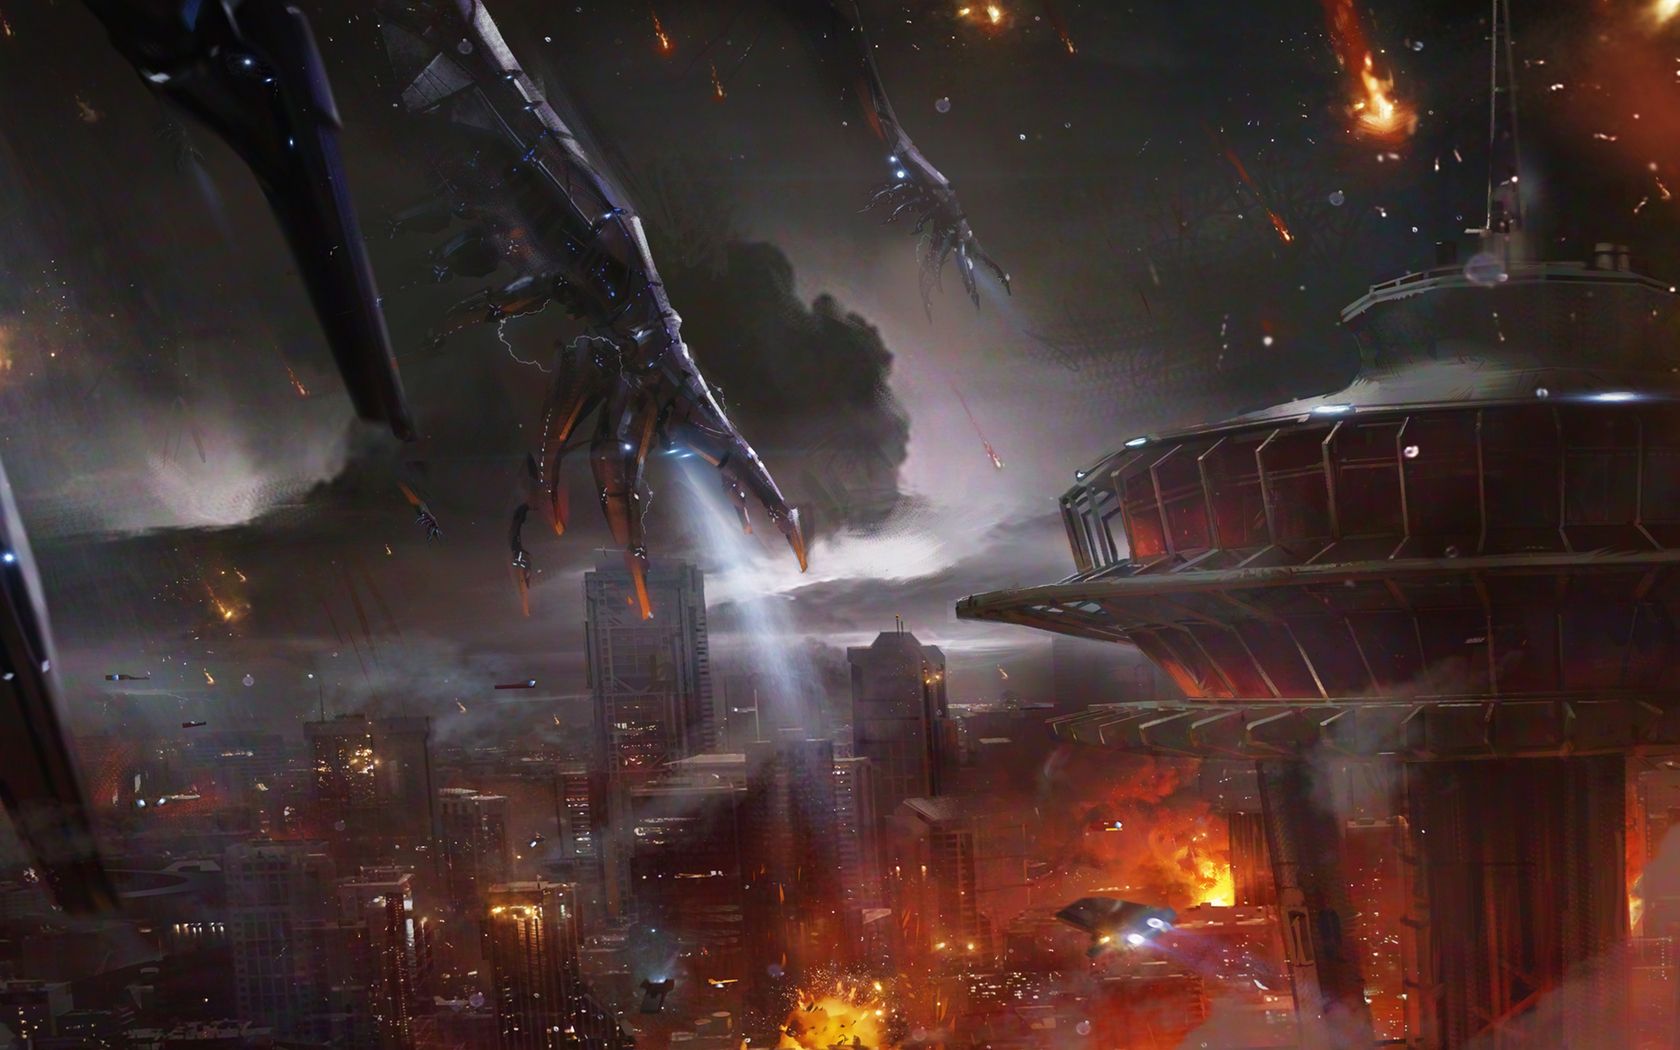 338 Mass Effect 3 HD Wallpapers | Backgrounds - Wallpaper Abyss